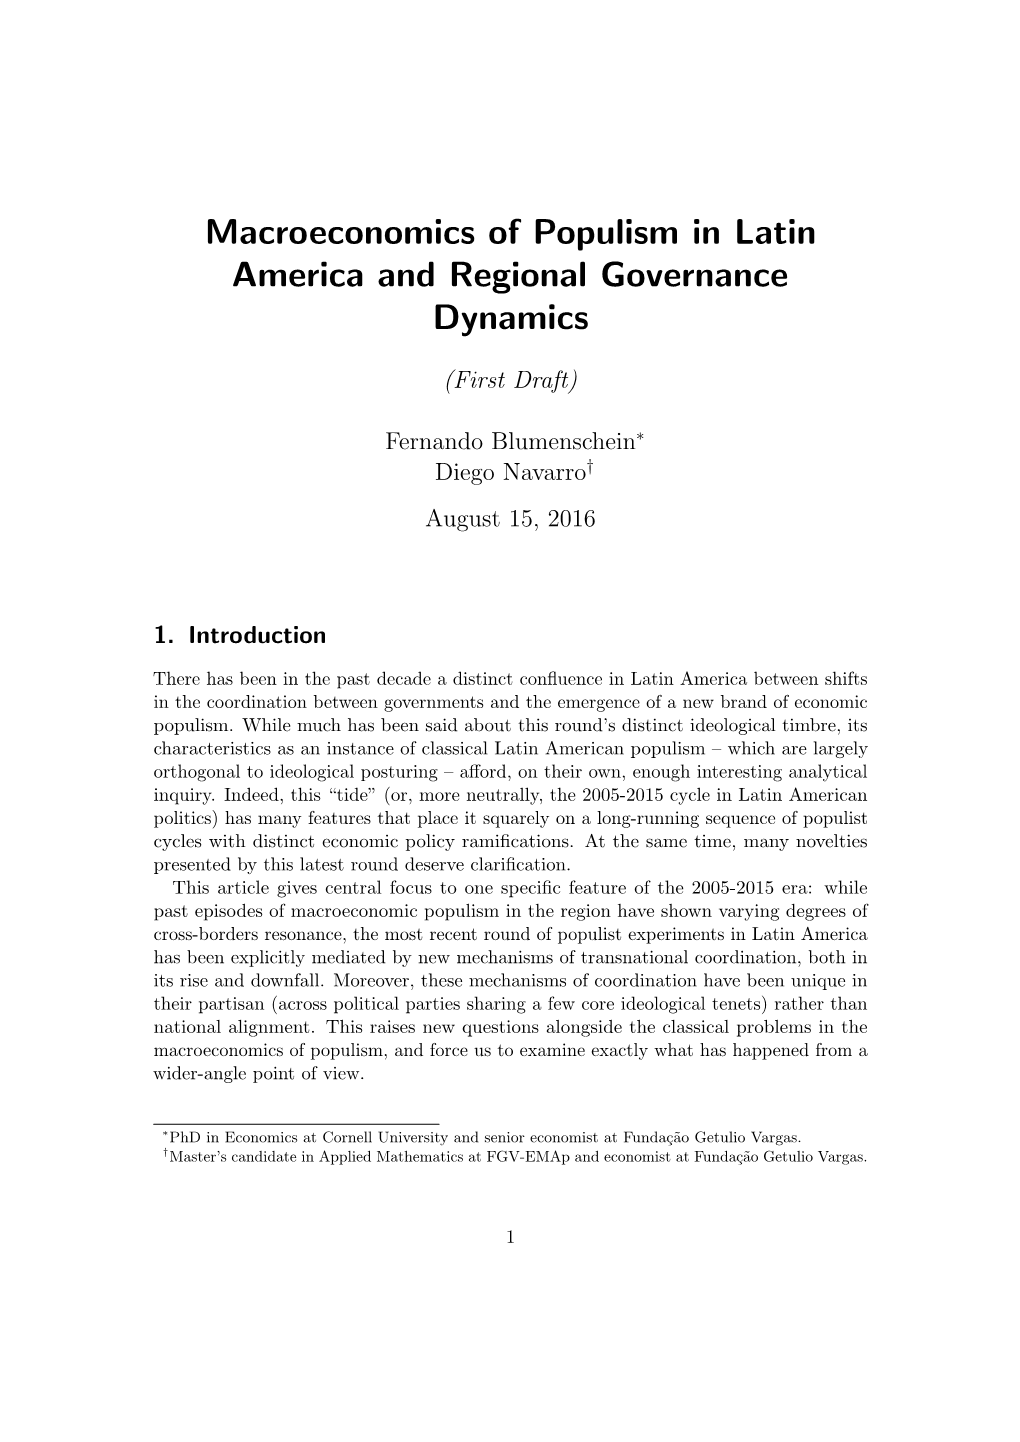 Macroeconomics of Populism in Latin America and Regional Governance Dynamics